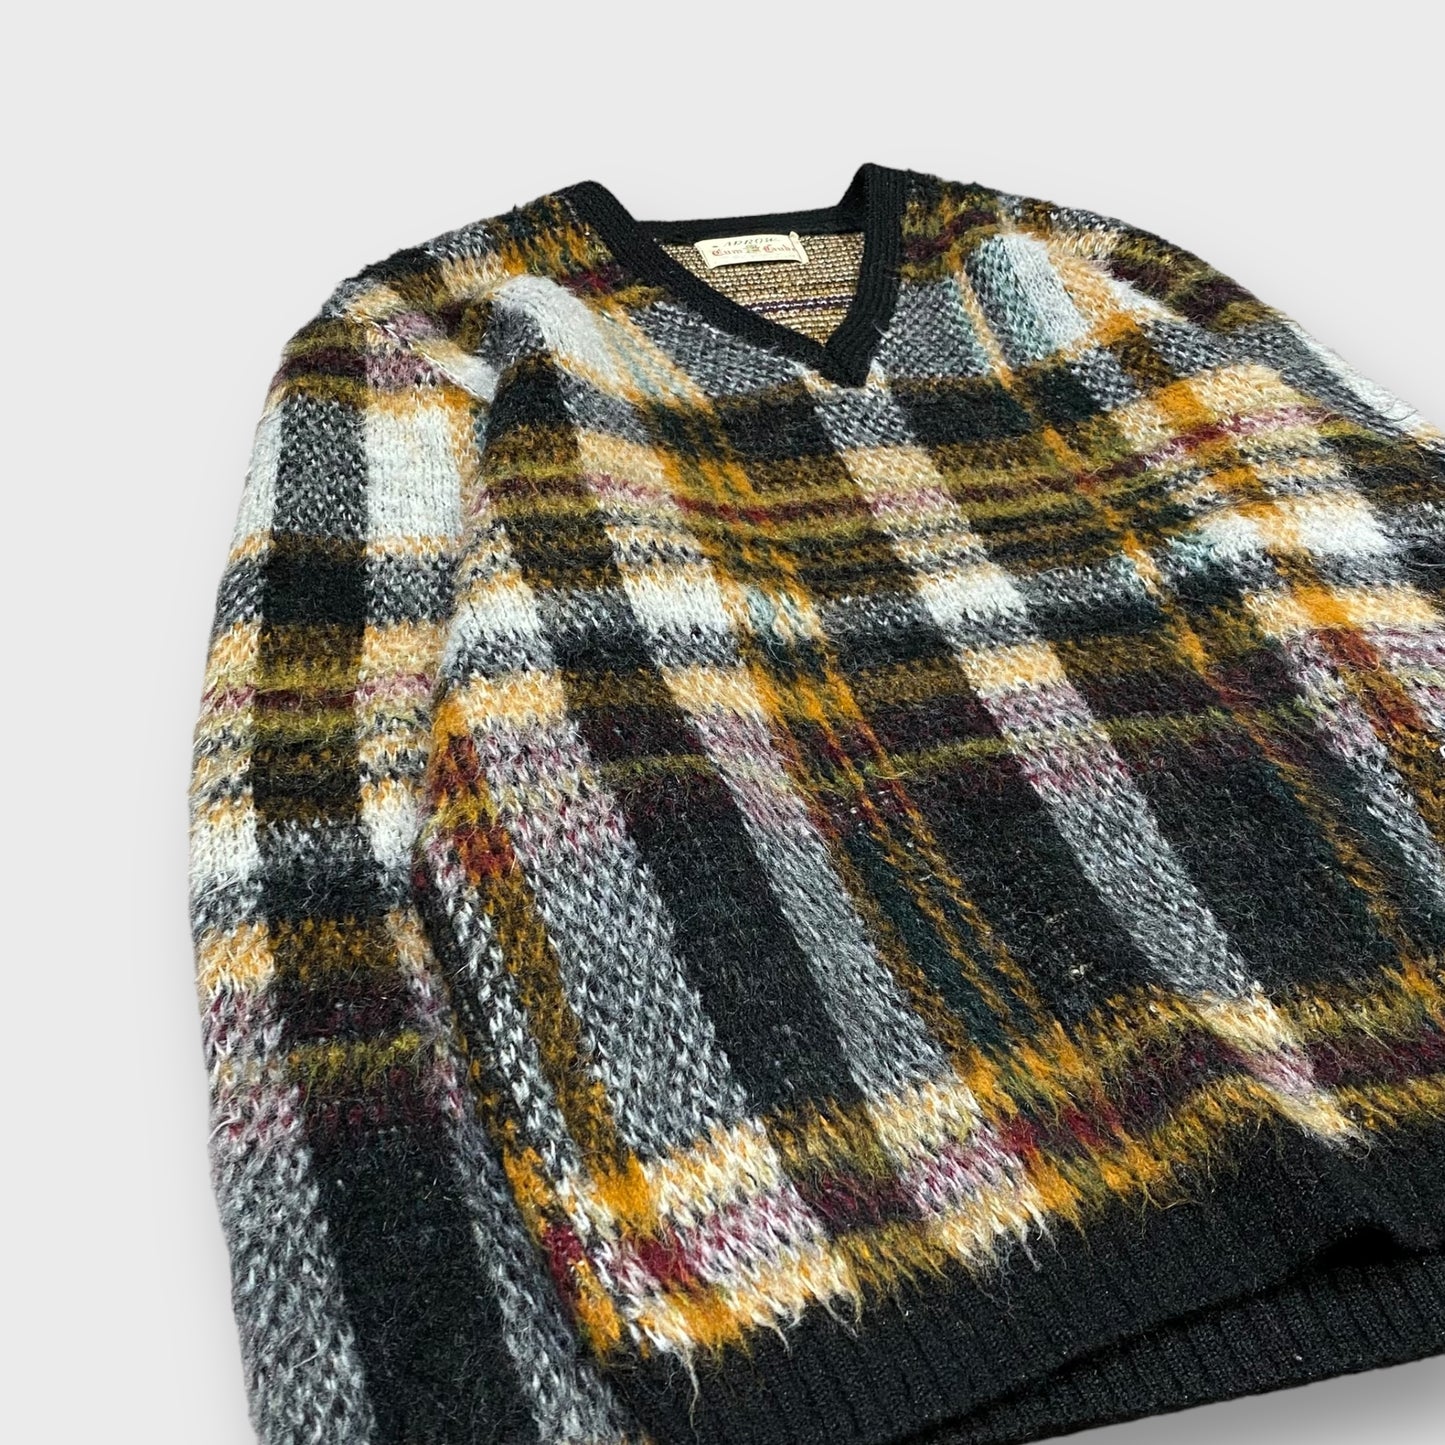 60's "ARROW" Plaid pattern orlon acrylic knit sweater